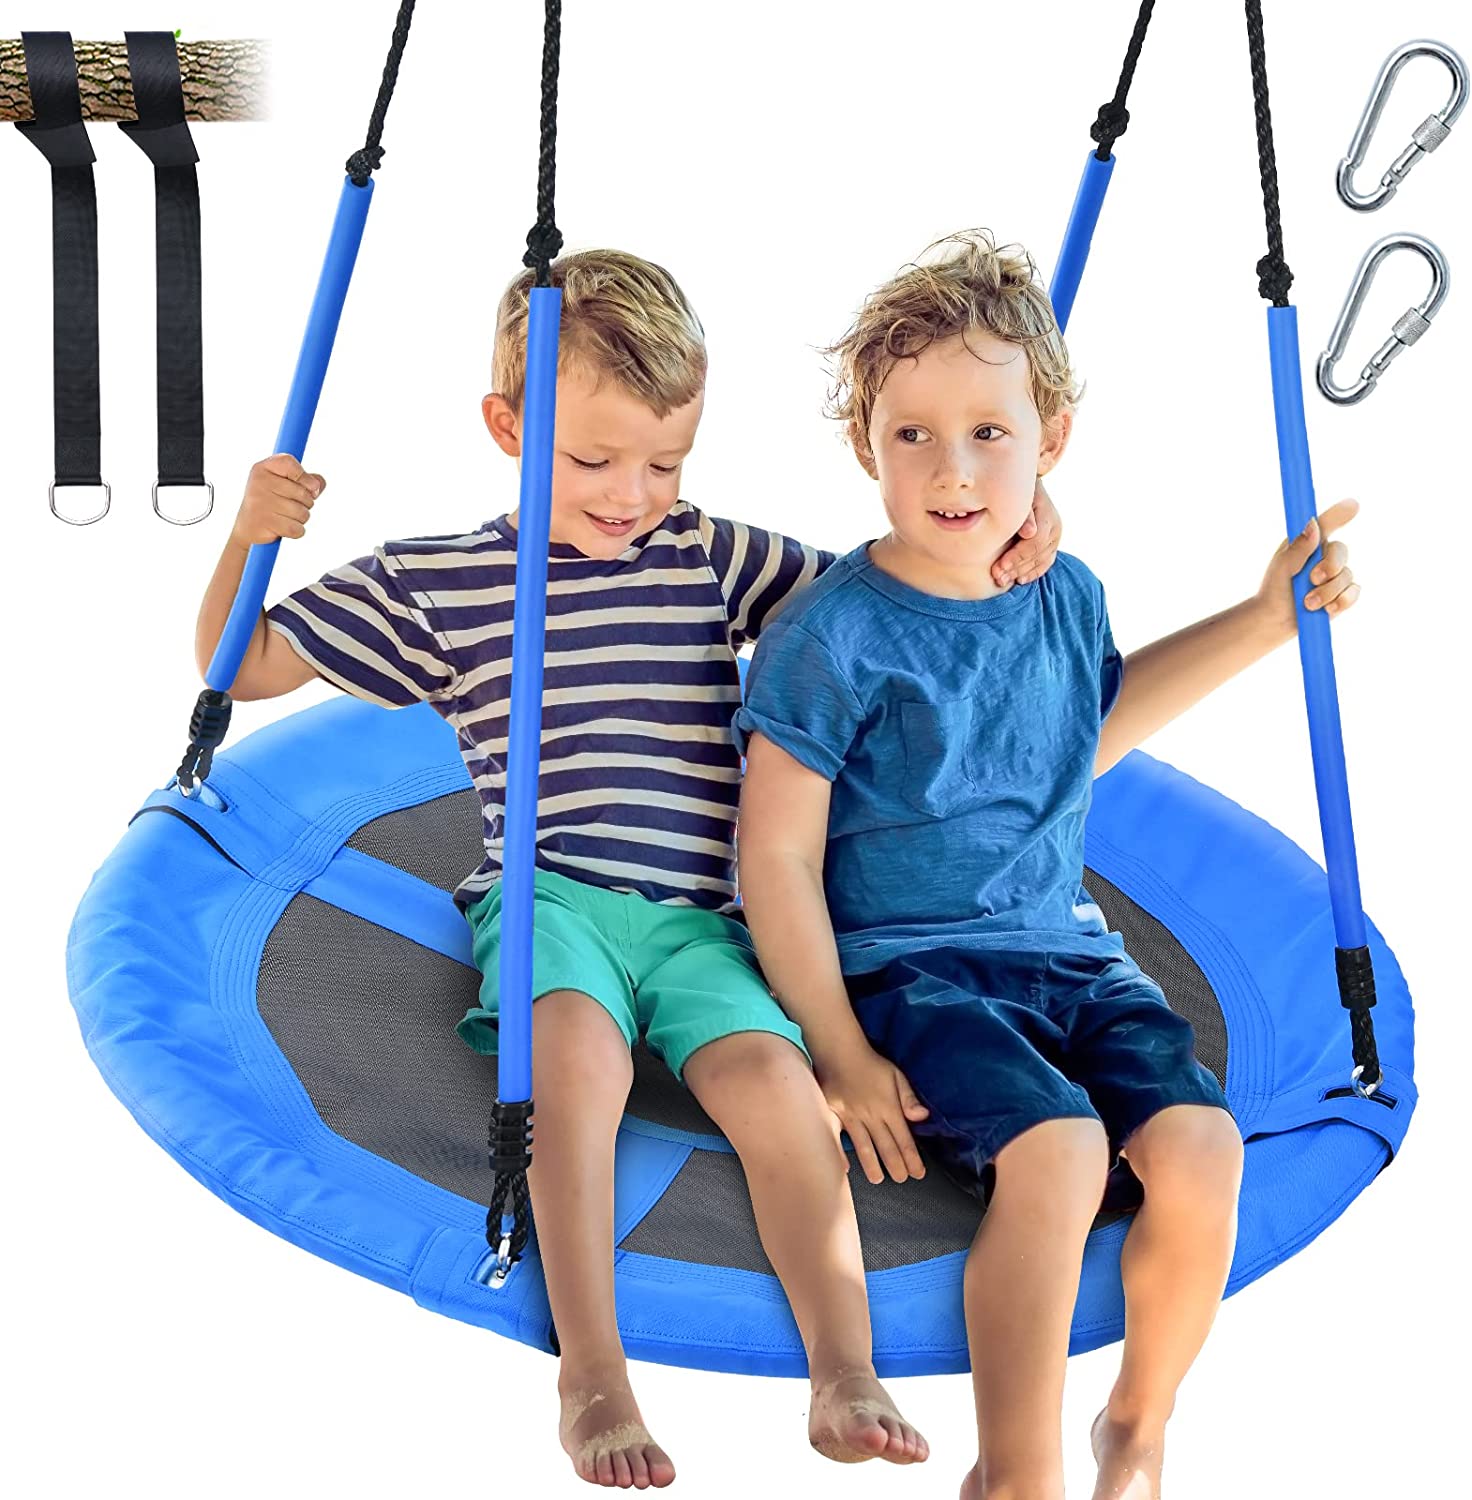 Trekassy 700lbs 40" Round Tree Swing with Handles for Kids